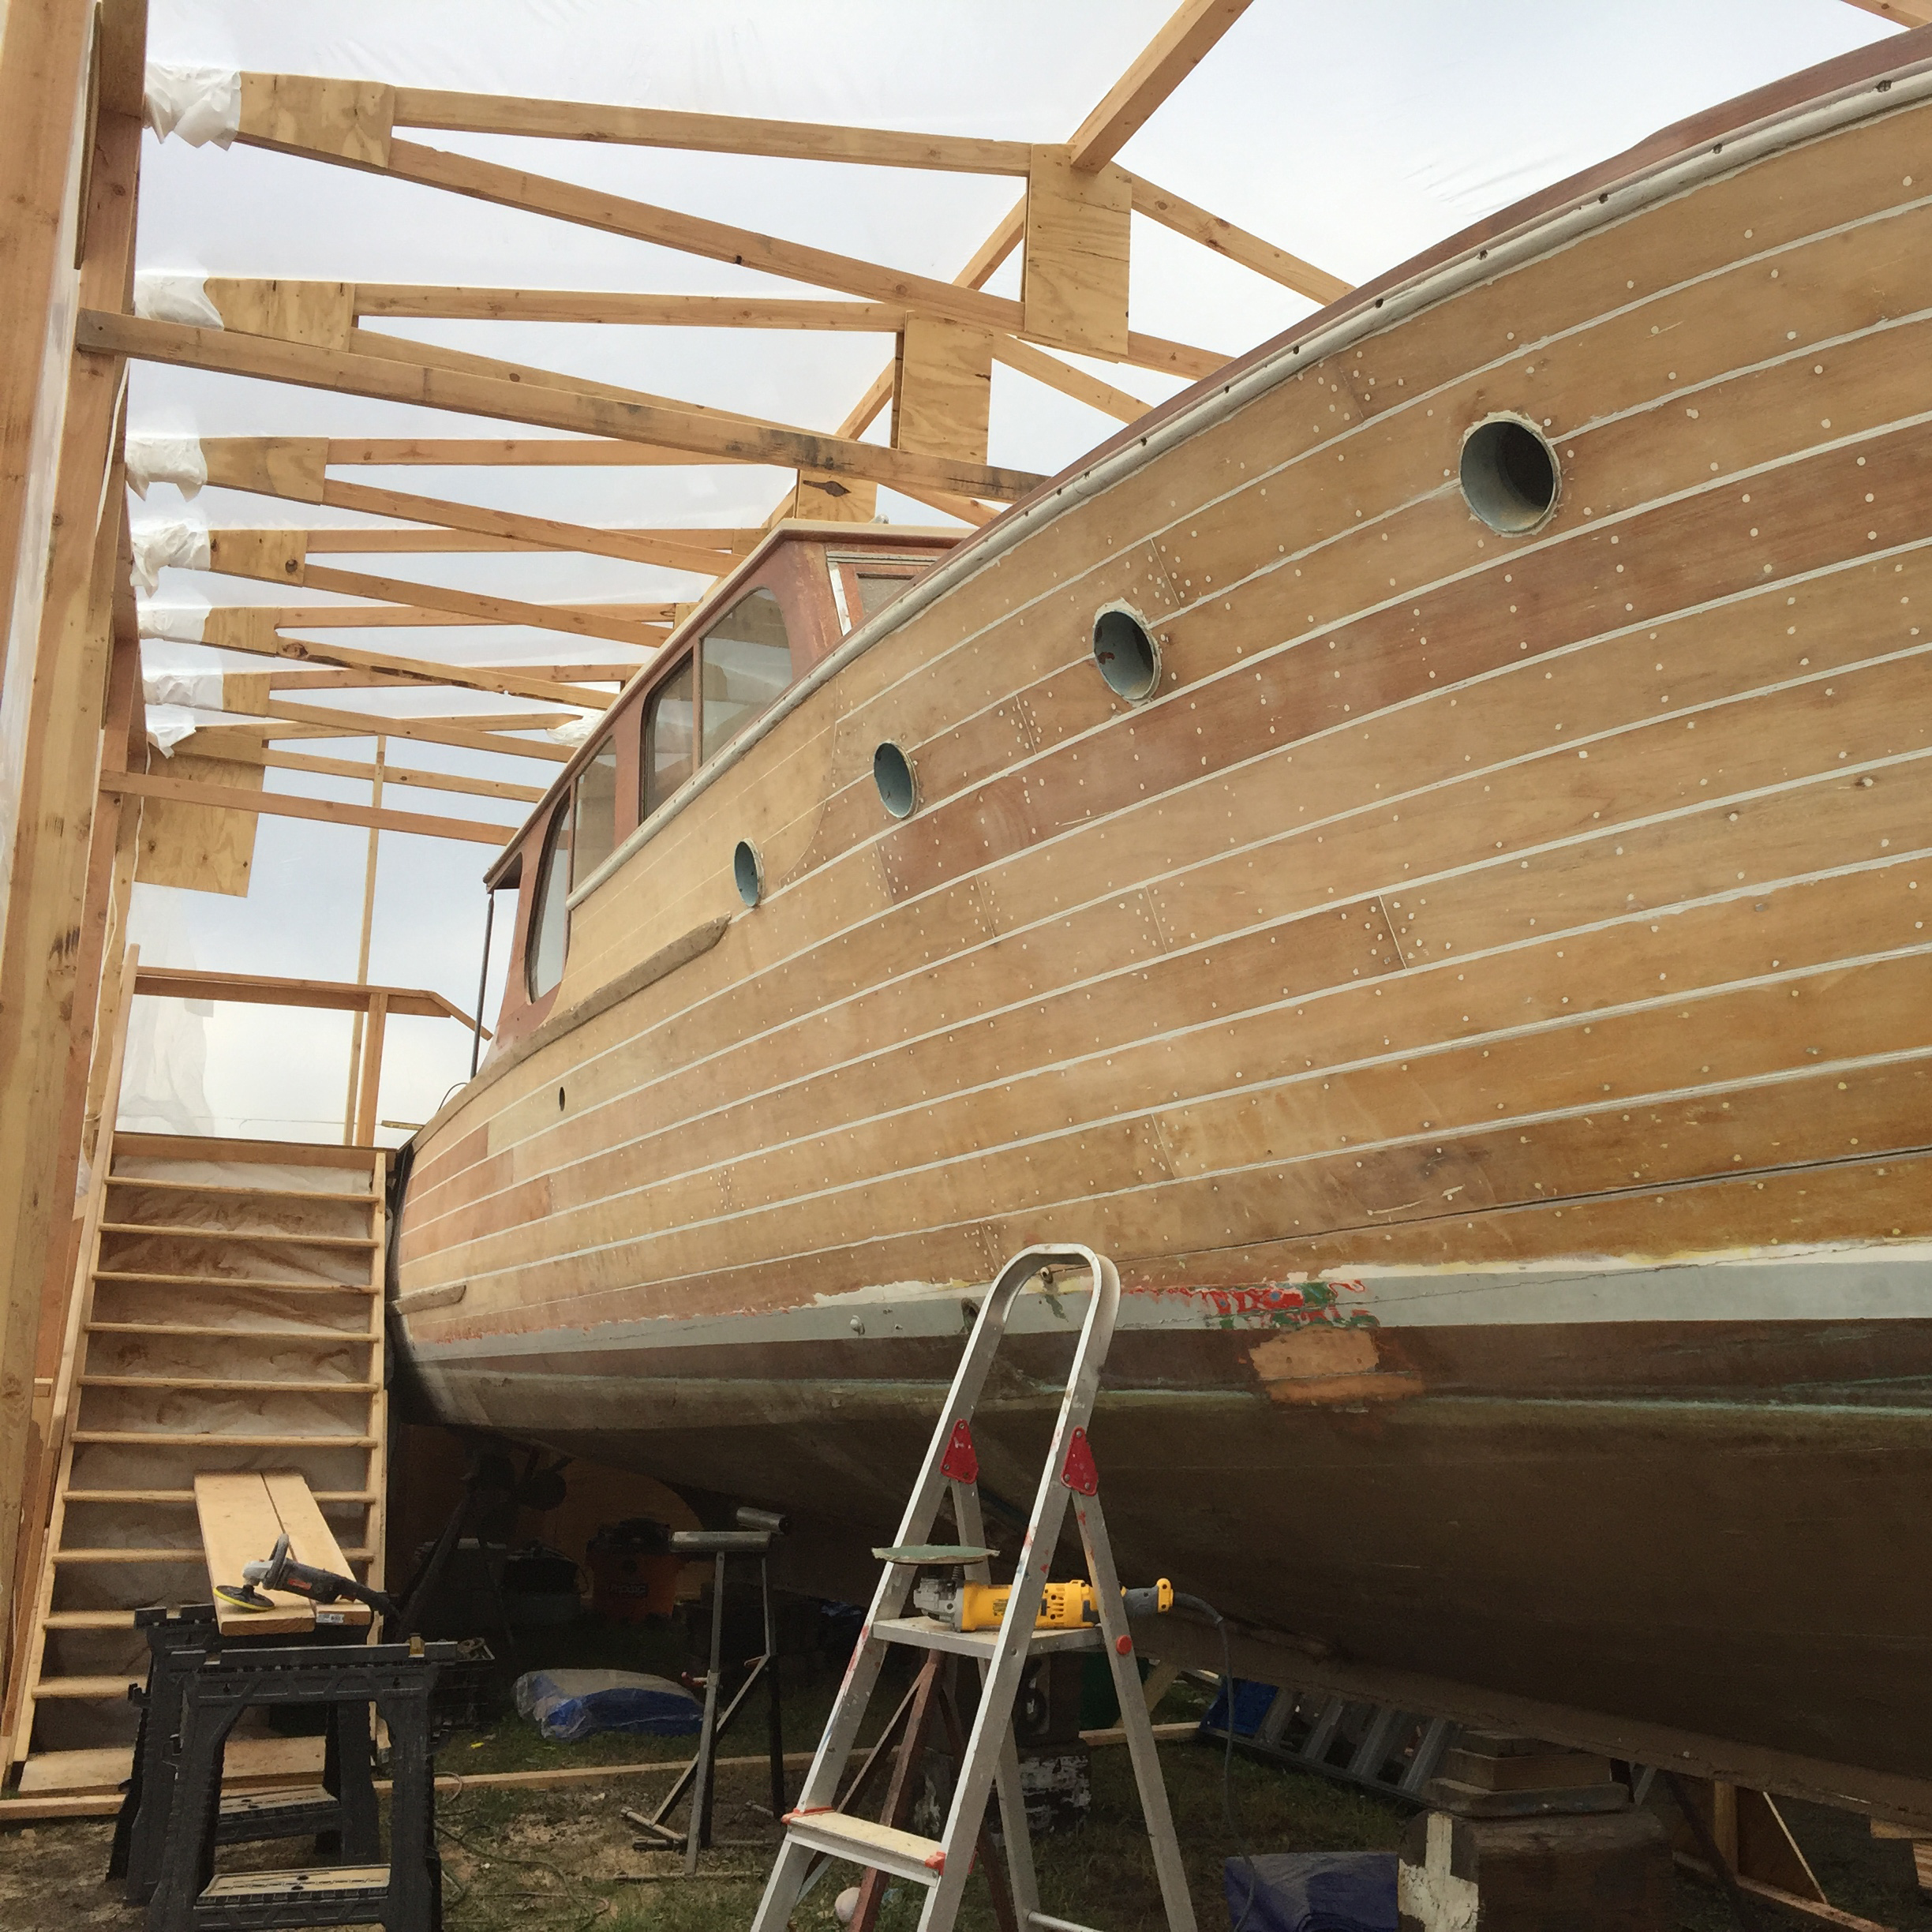 The boat under restoration 